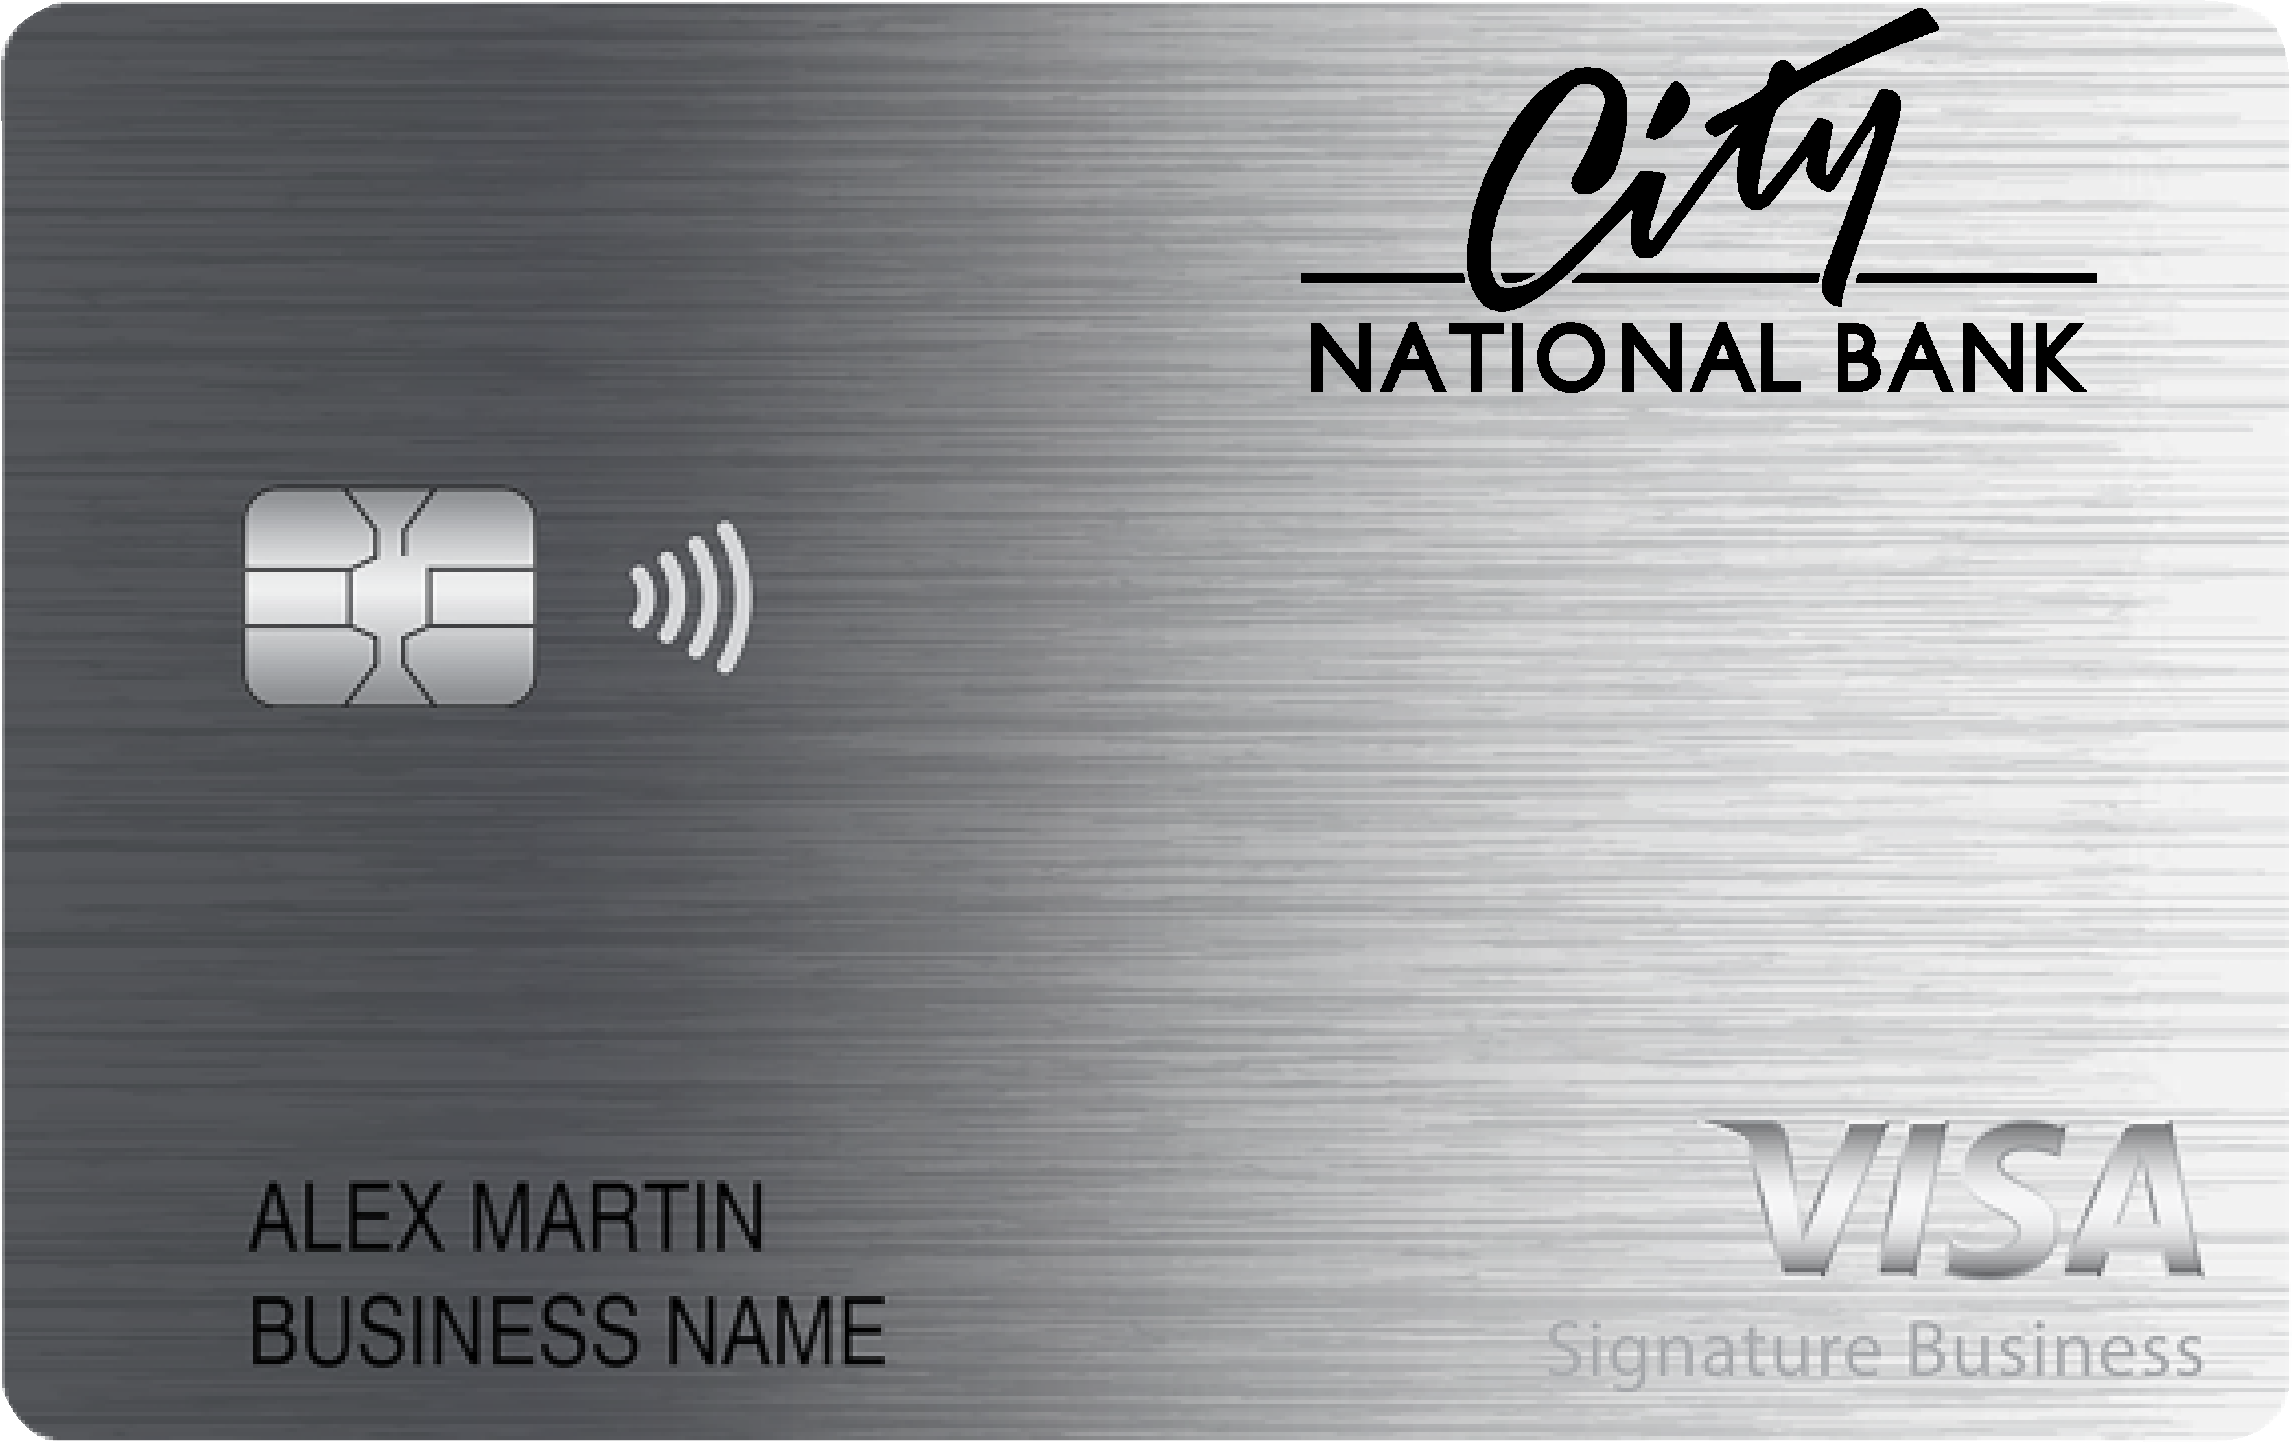 City National Bank & Trust Smart Business Rewards Card